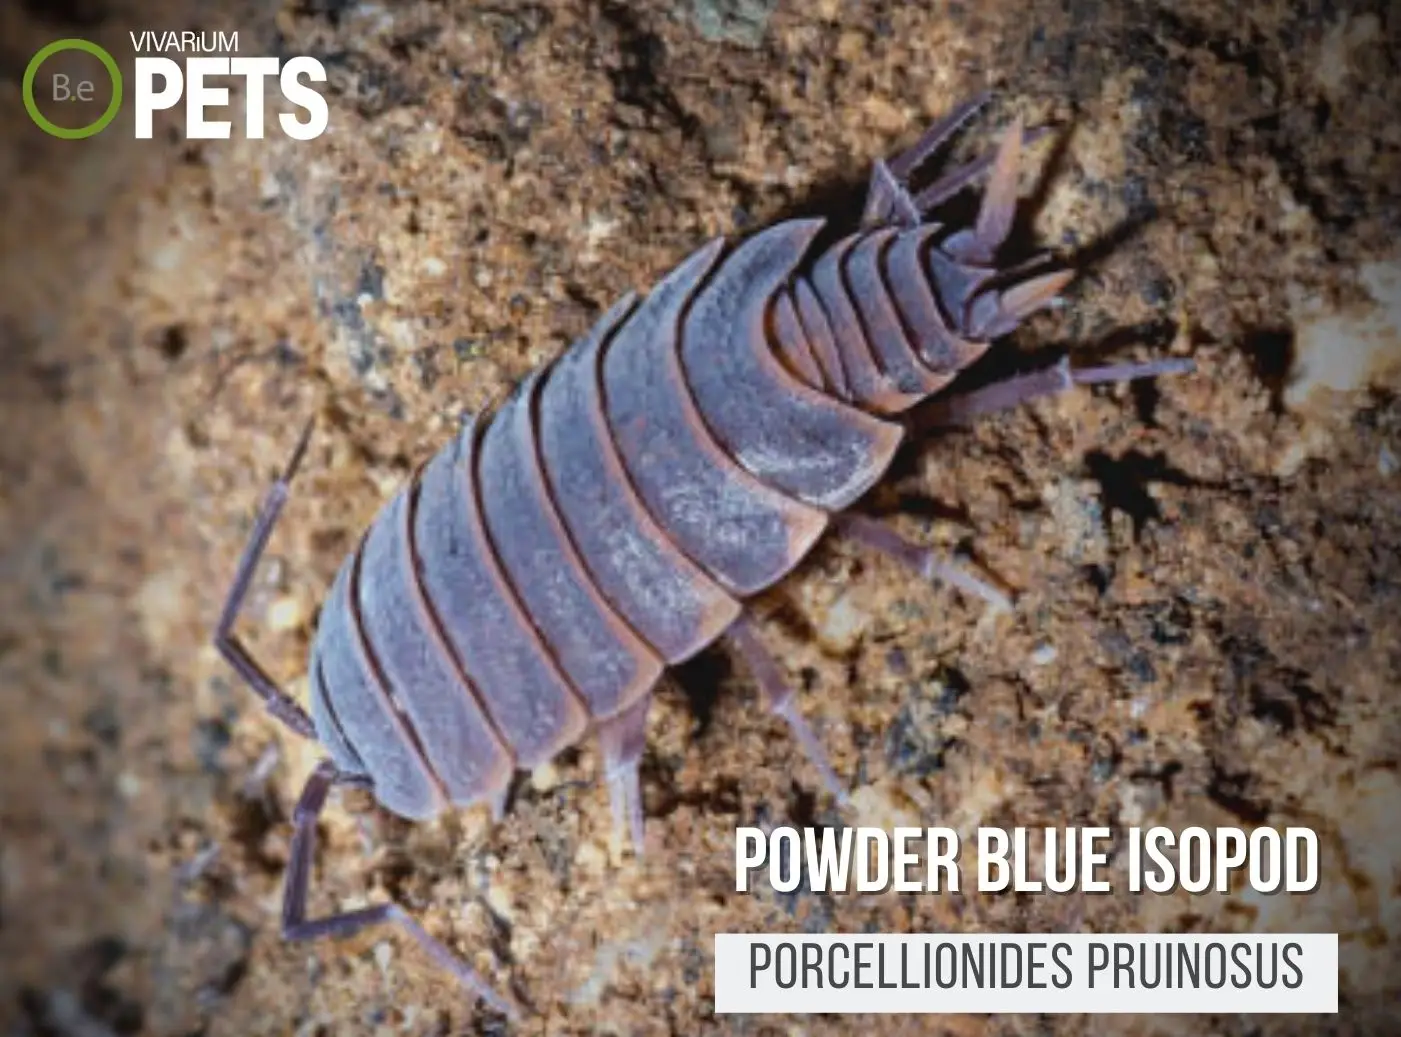 Porcellionides pruinosus "Powder Blue Isopods" | Care Guide